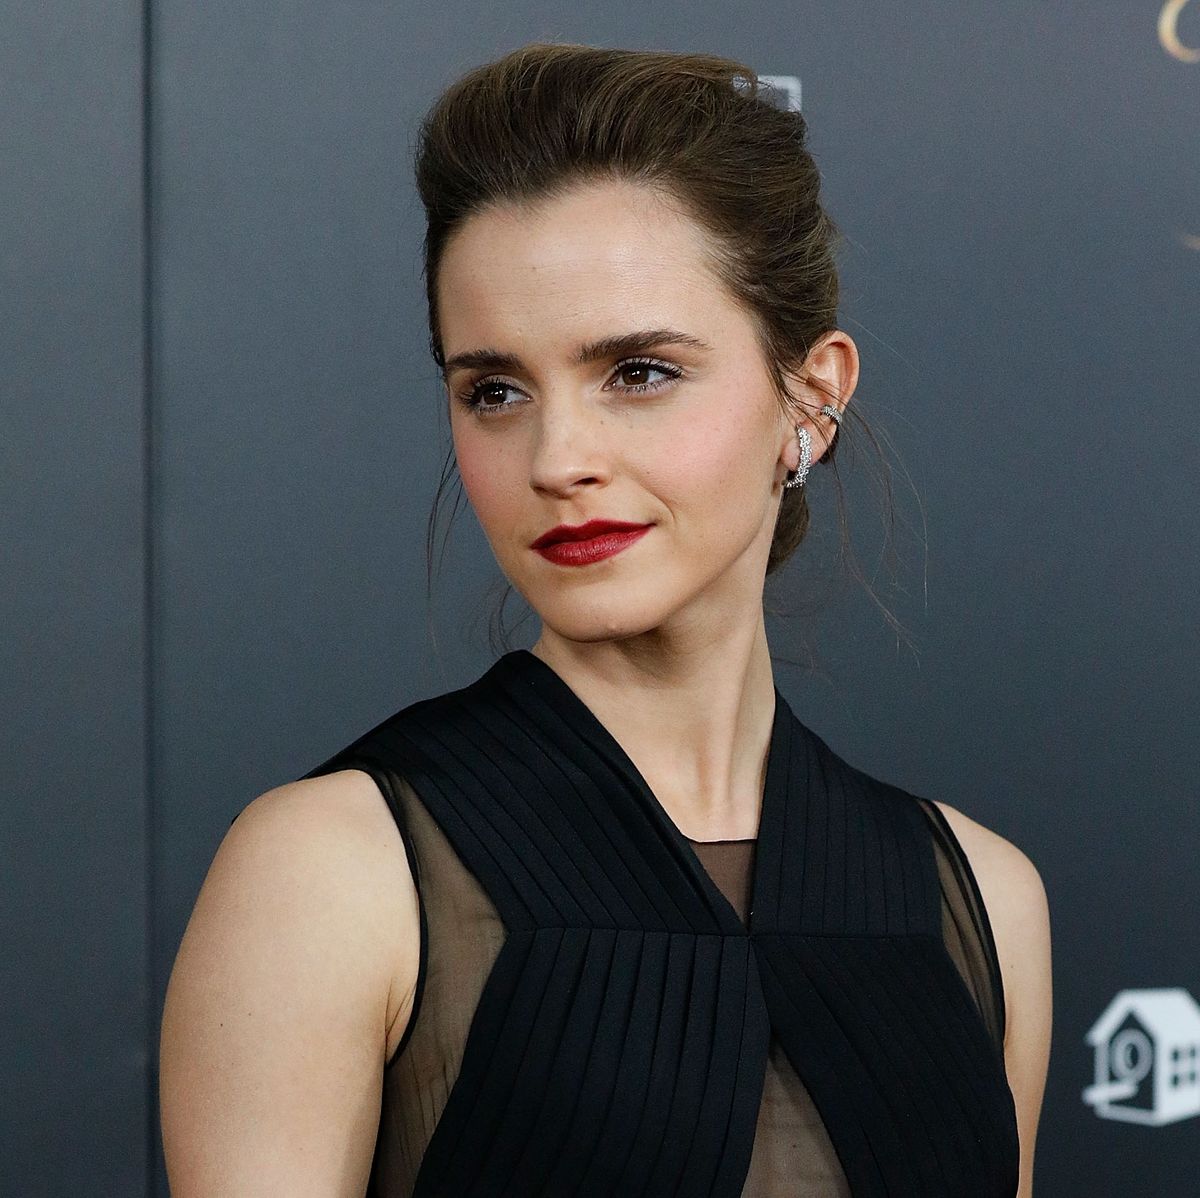 Emma Watson Xxx Videos - Emma Watson's Net Worth and 'Harry Potter' Earnings Will Shock You